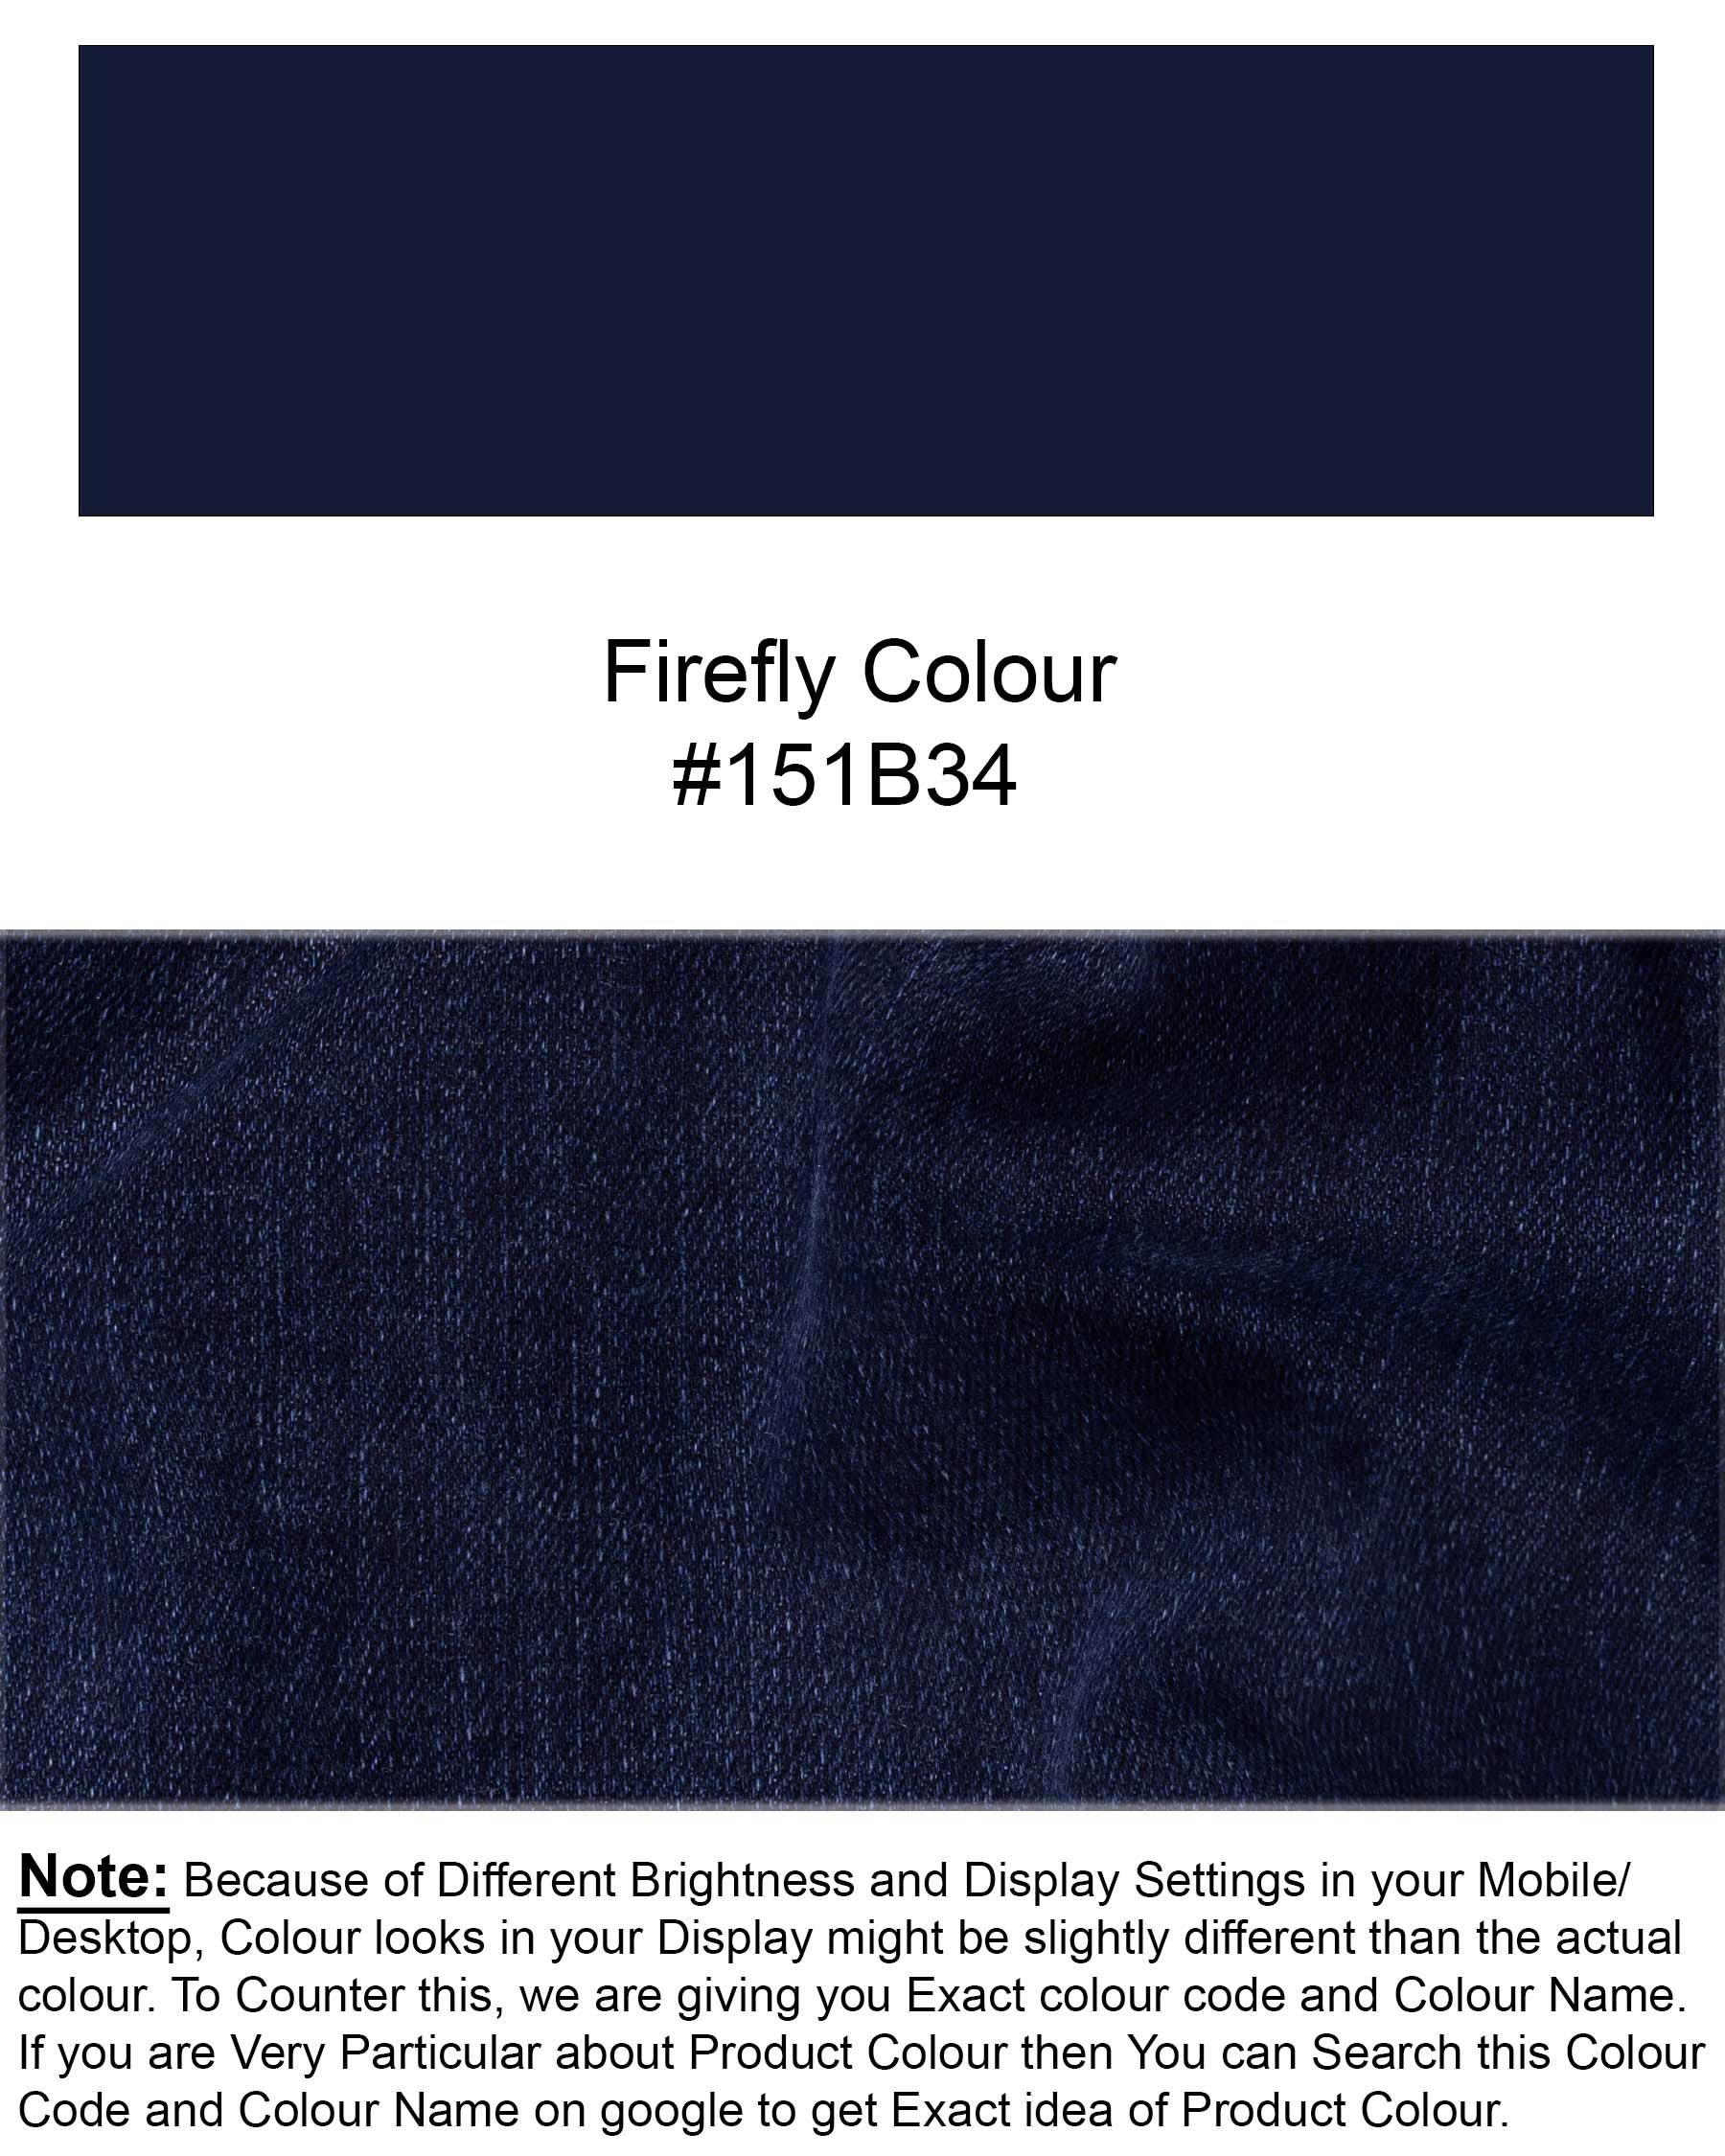 Firefly Blue Rinse Wash Clean Look Stretchable Denim J150-32, J150-34, J150-36, J150-38, J150-40